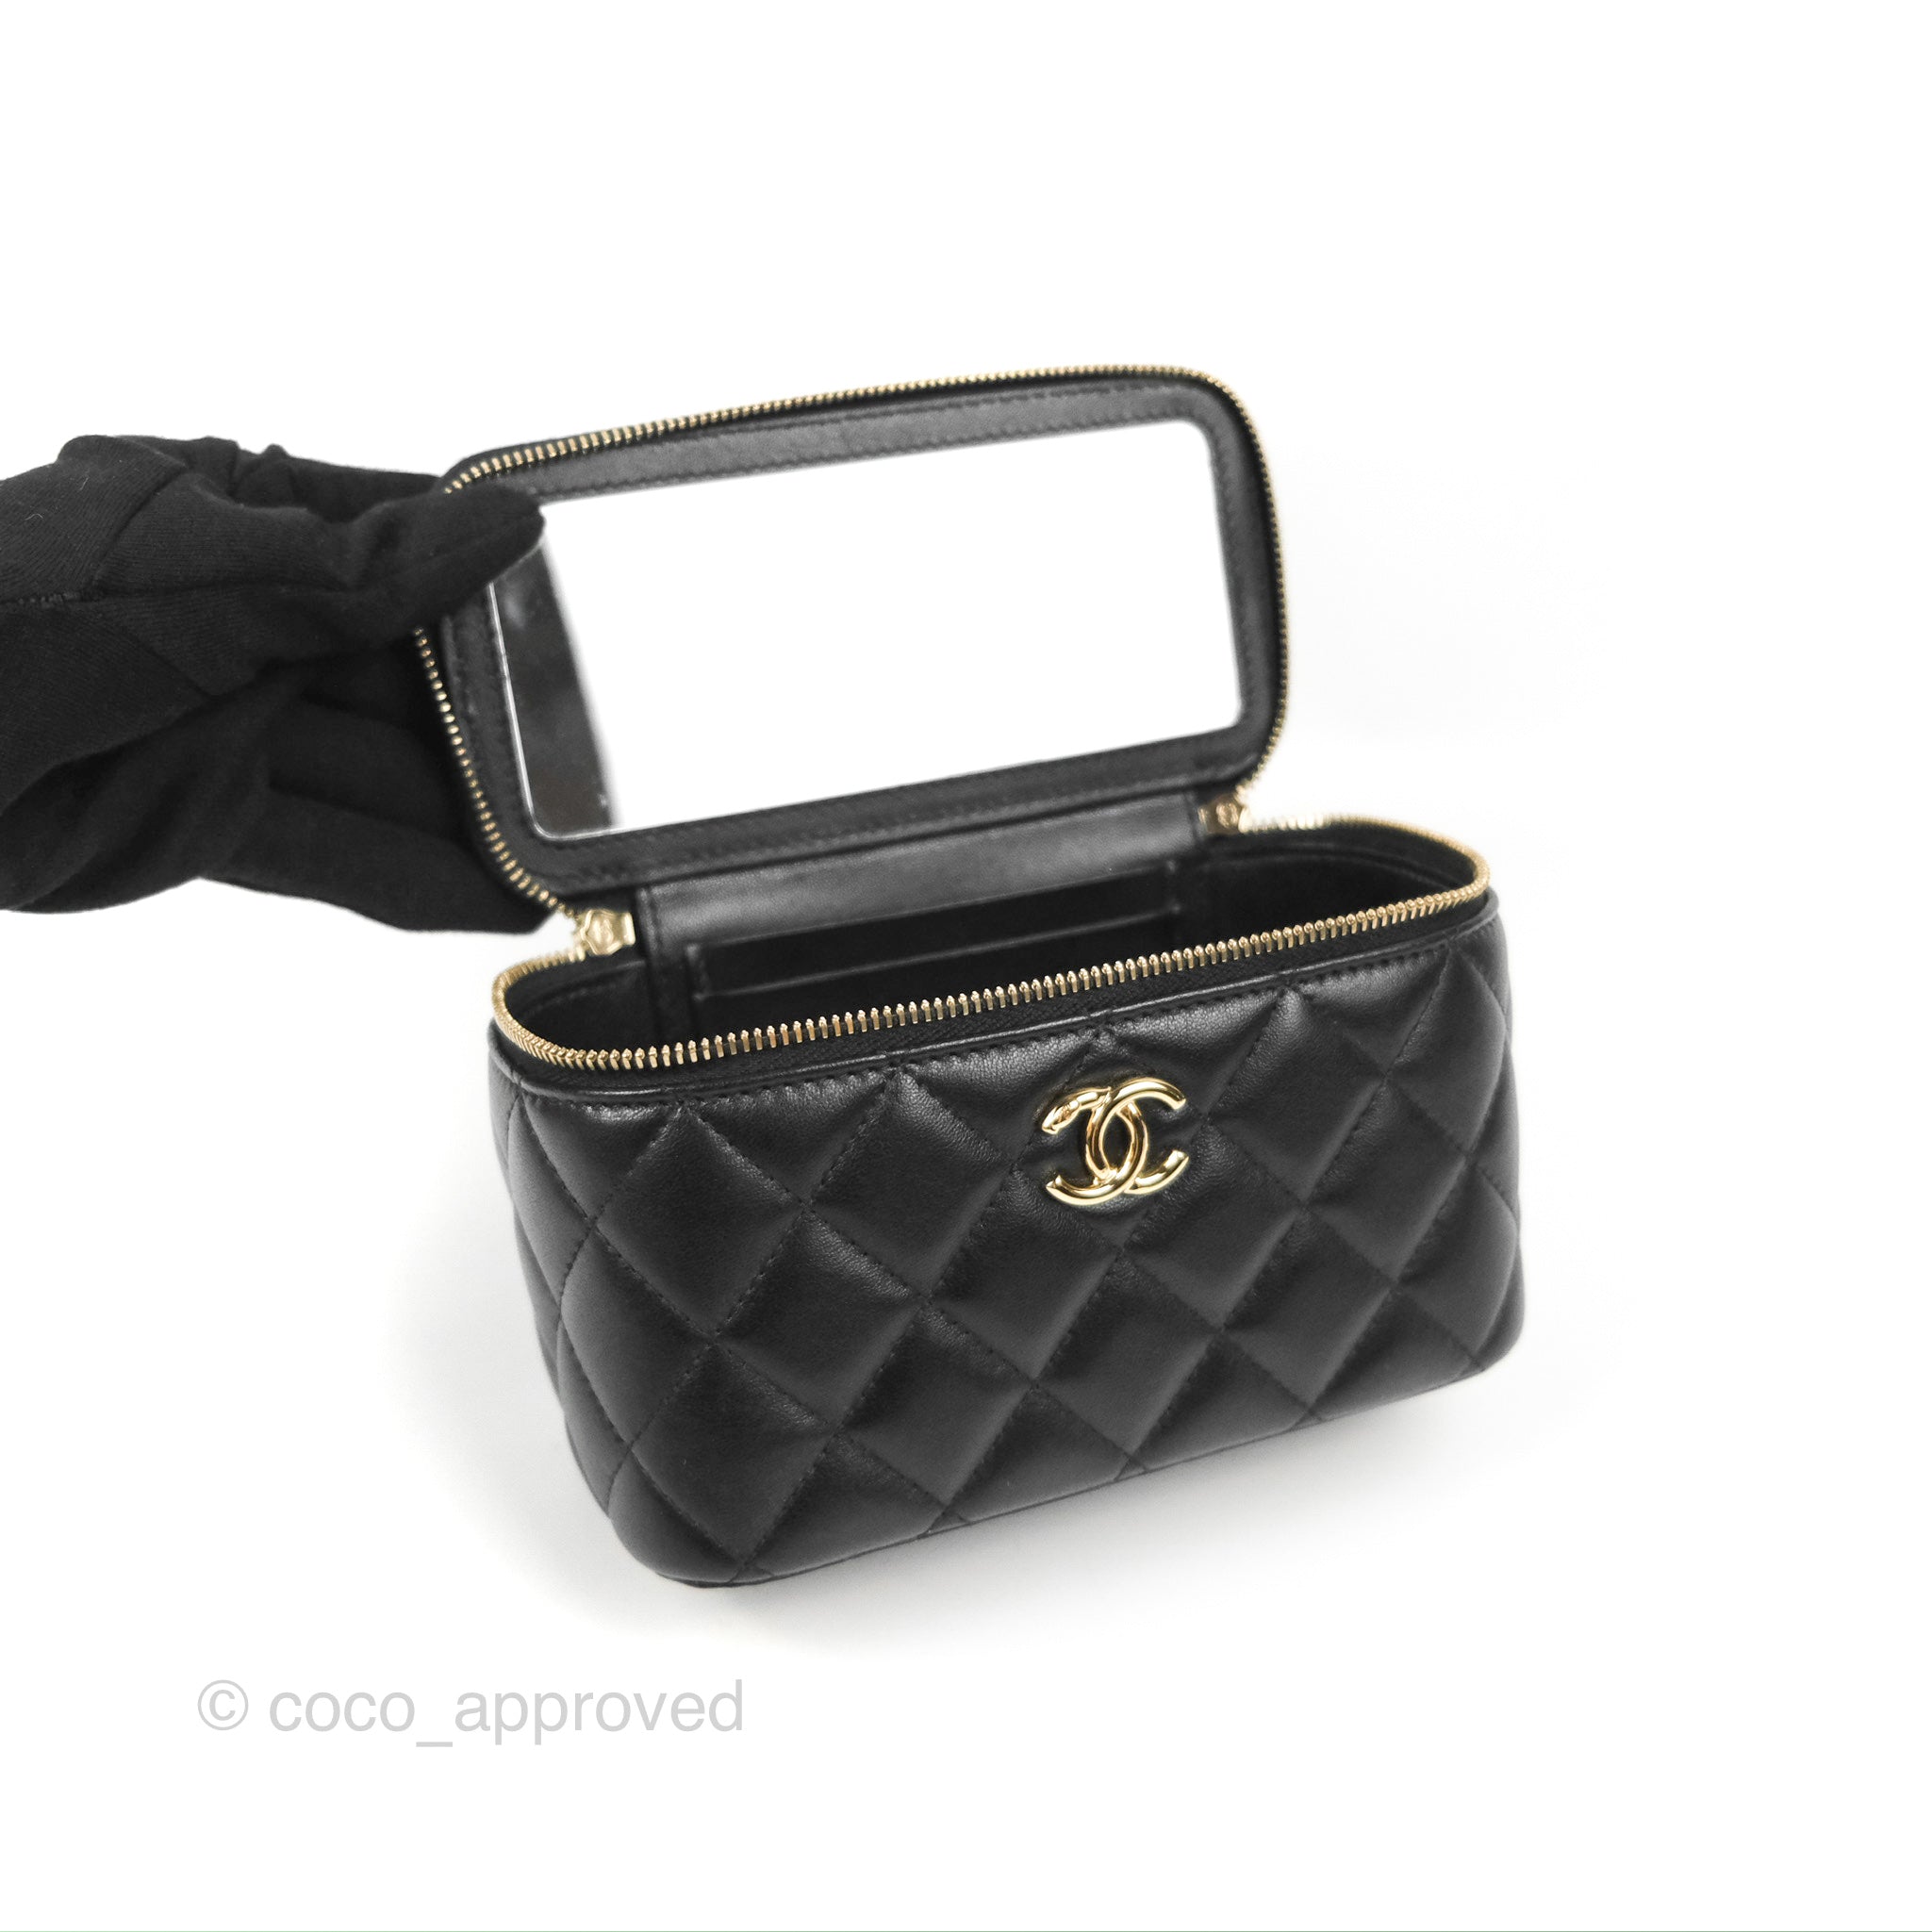 Chanel small vanity bag - Gem